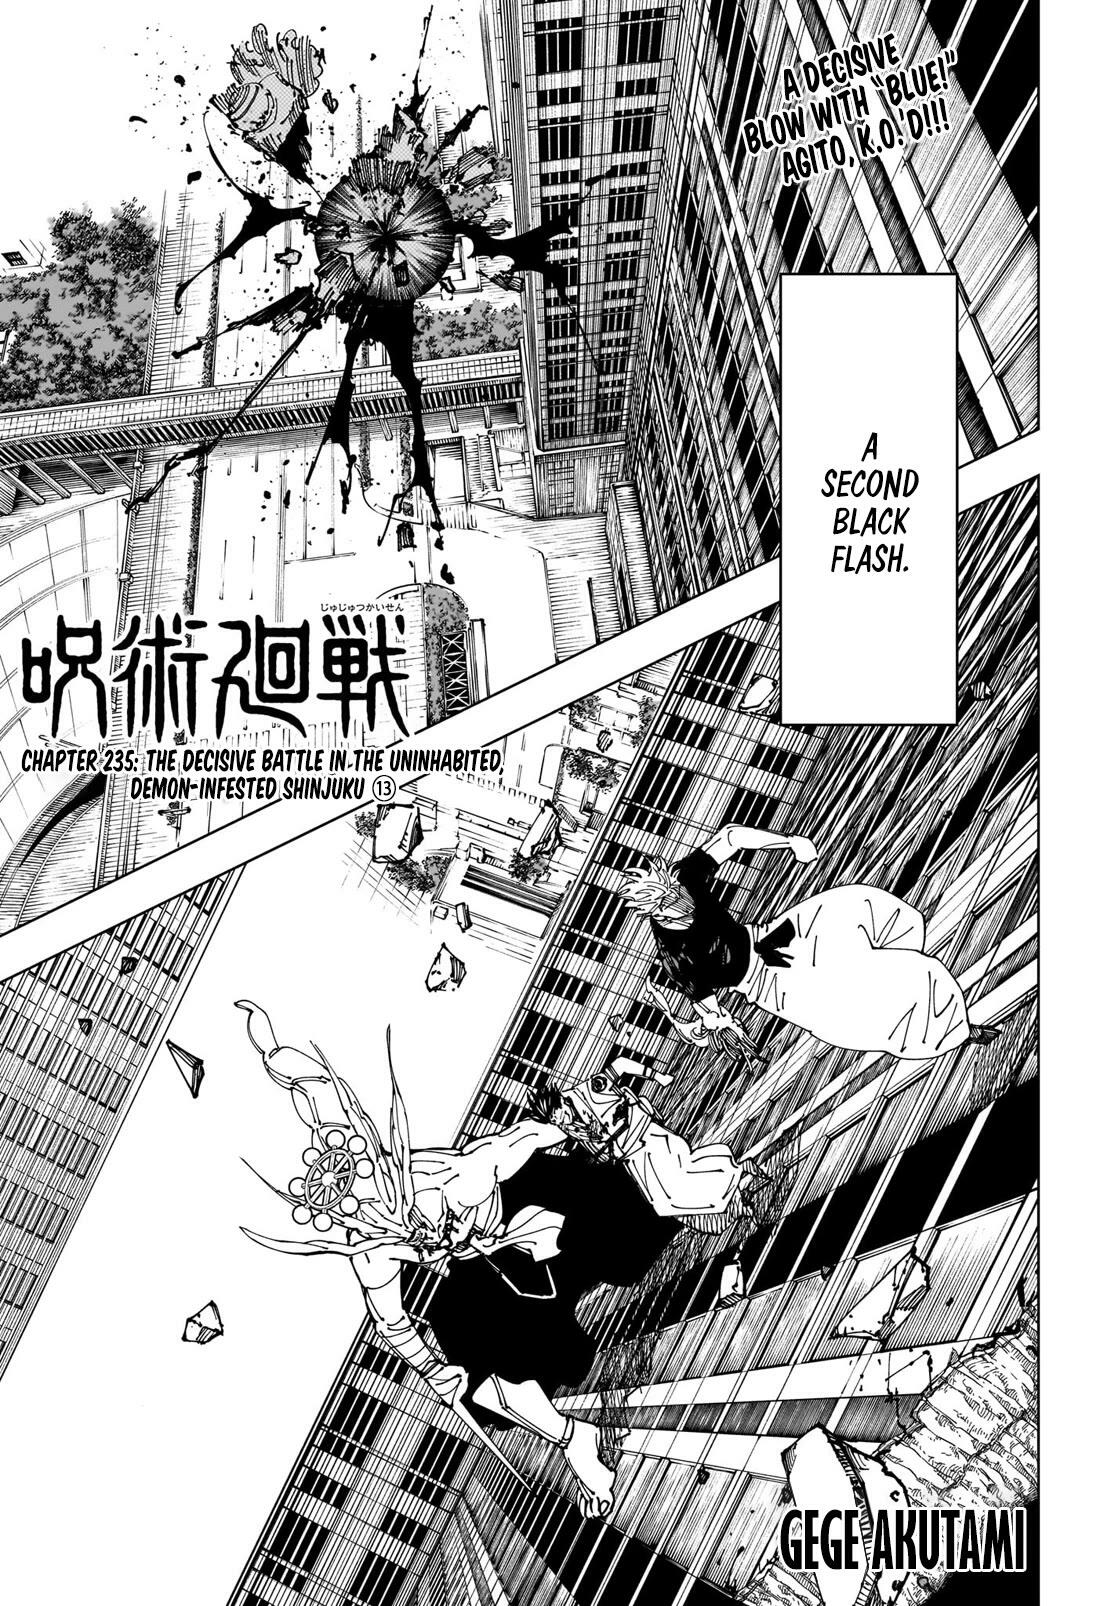 Jujutsu Kaisen Chapter 235: The Decisive Battle In The Uninhabited, Demon-Infested Shinjuku ⑬ page 1 - Mangakakalot